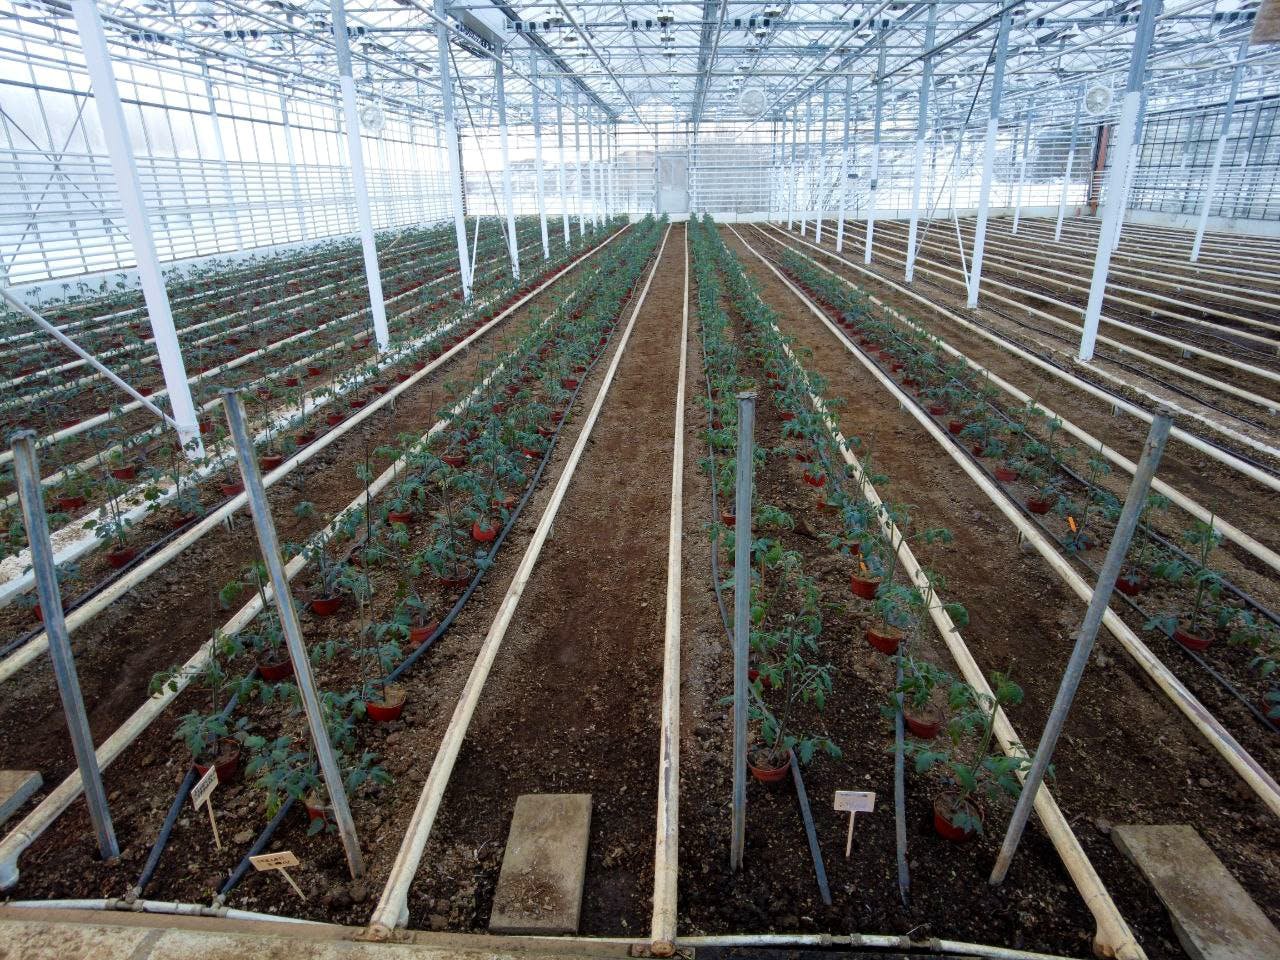 aifs-island-freiwilligenarbeit-ecovillage-greenhouse